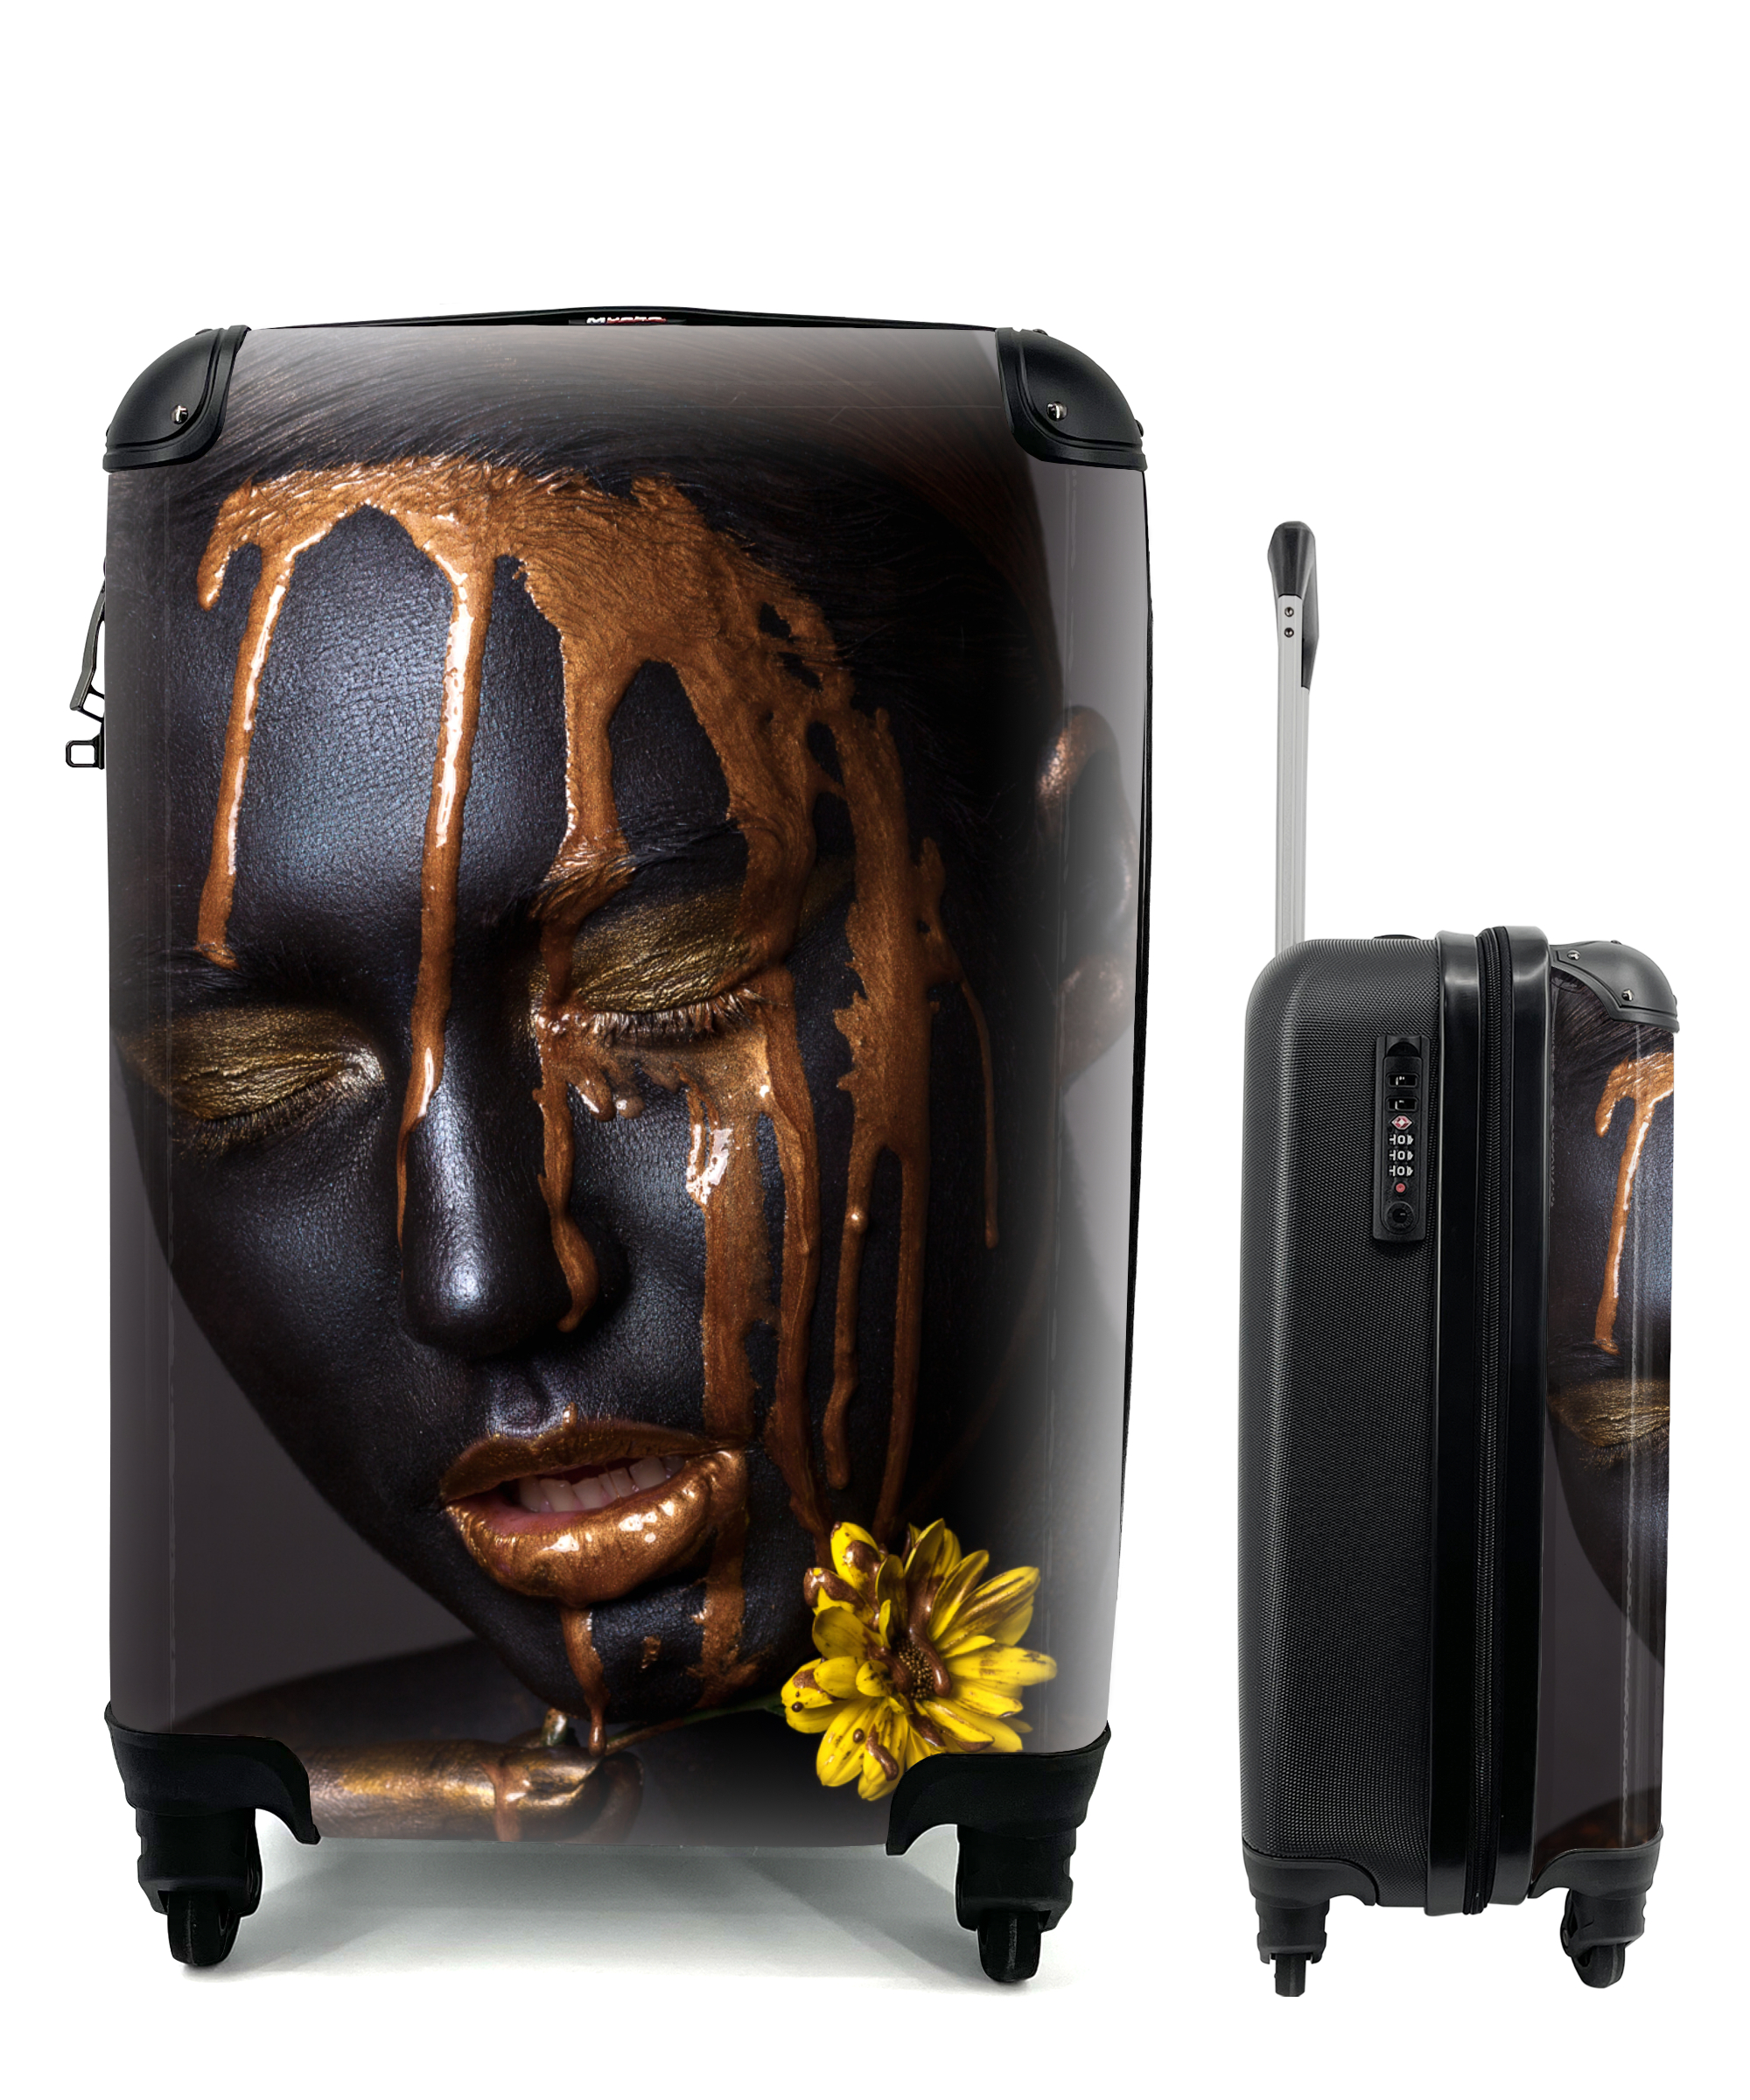 Koffer - Vrouw - Goud - Zwart - Verf - Bloem 